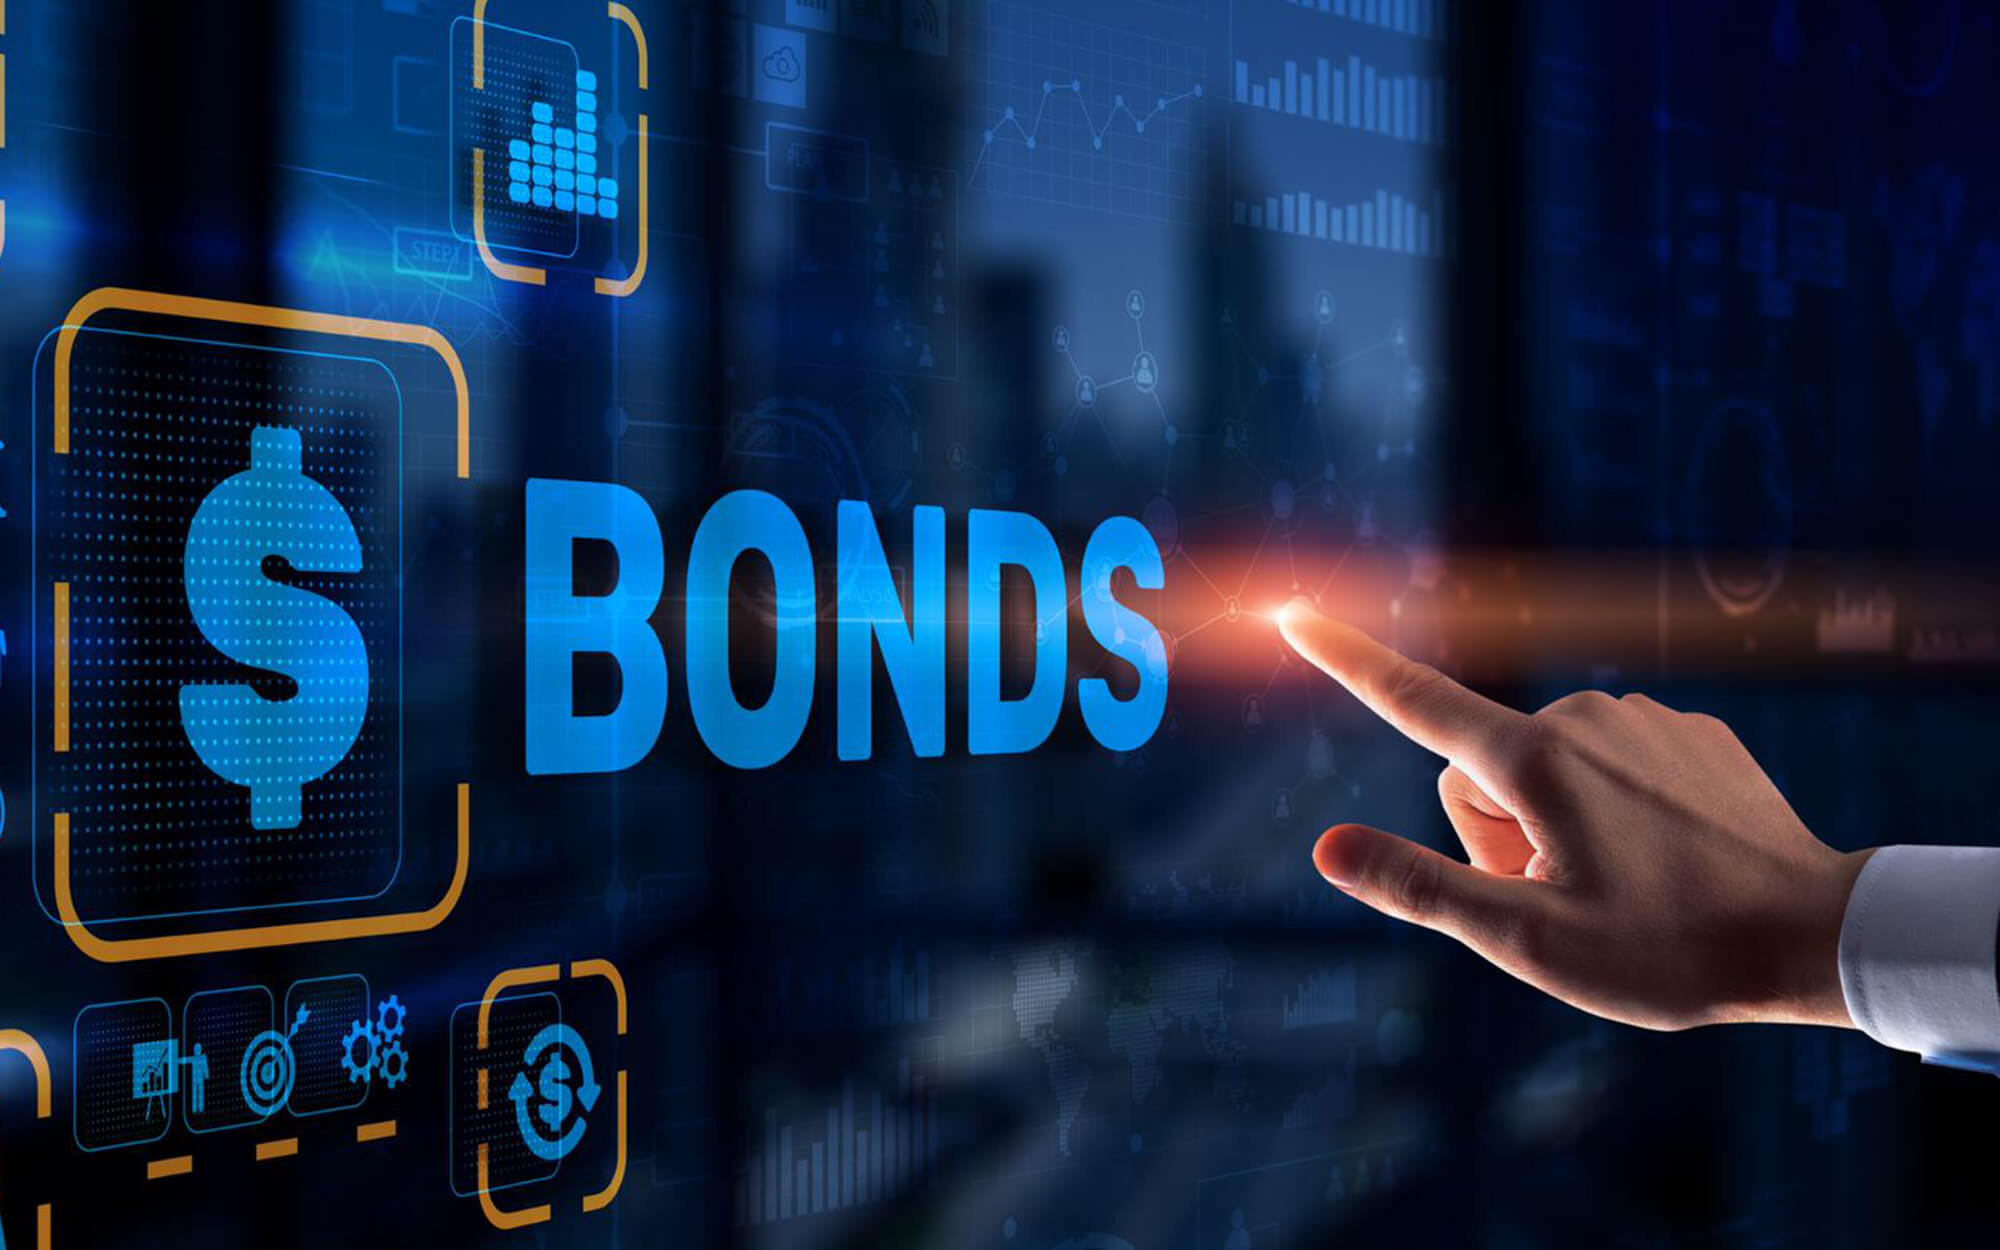 Bonds Image